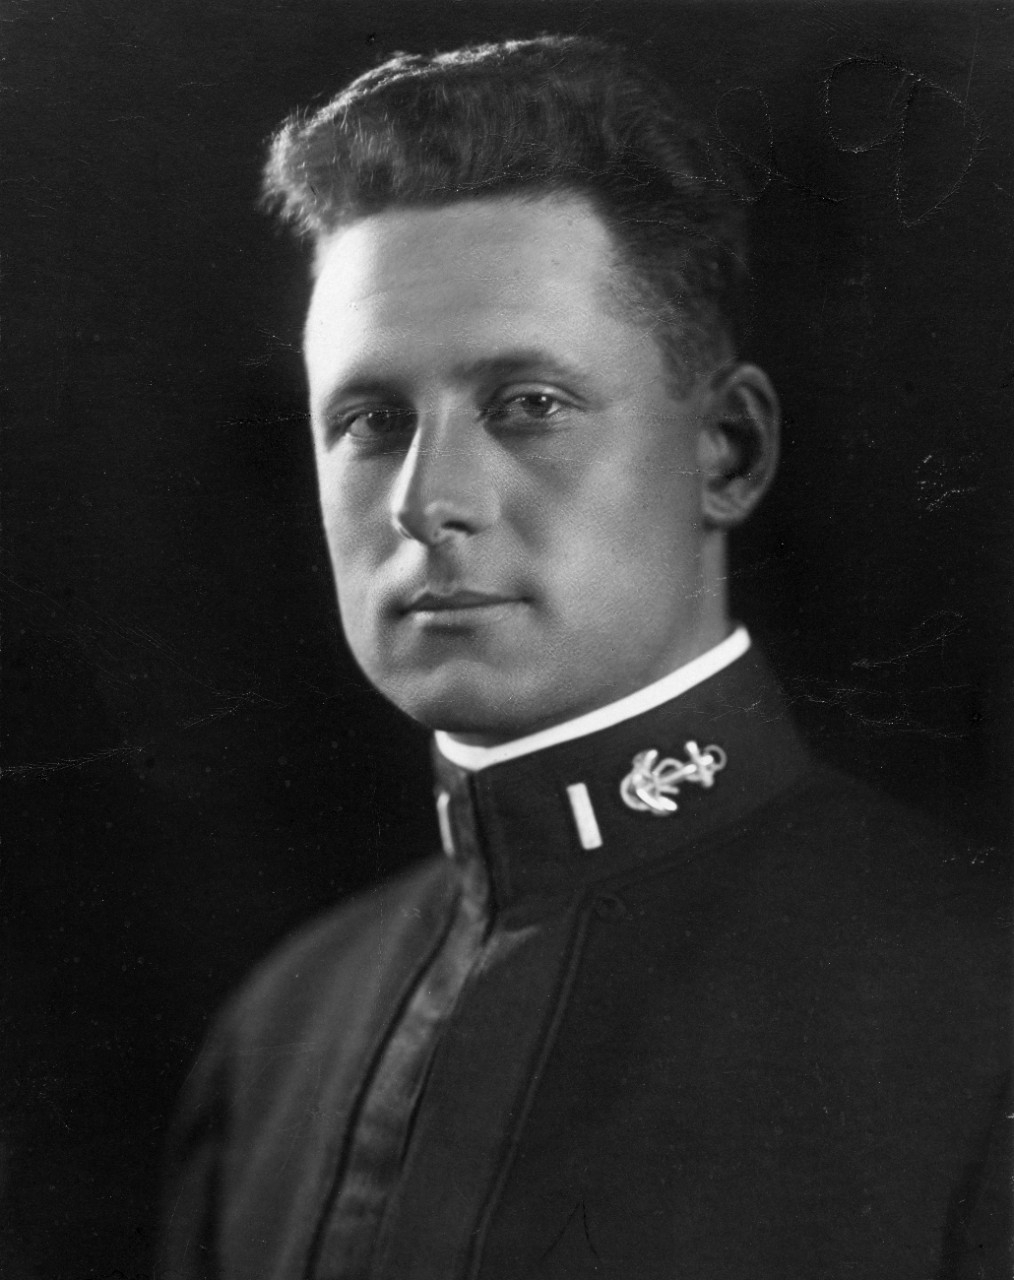 Ensign Paul F. Foster, USN